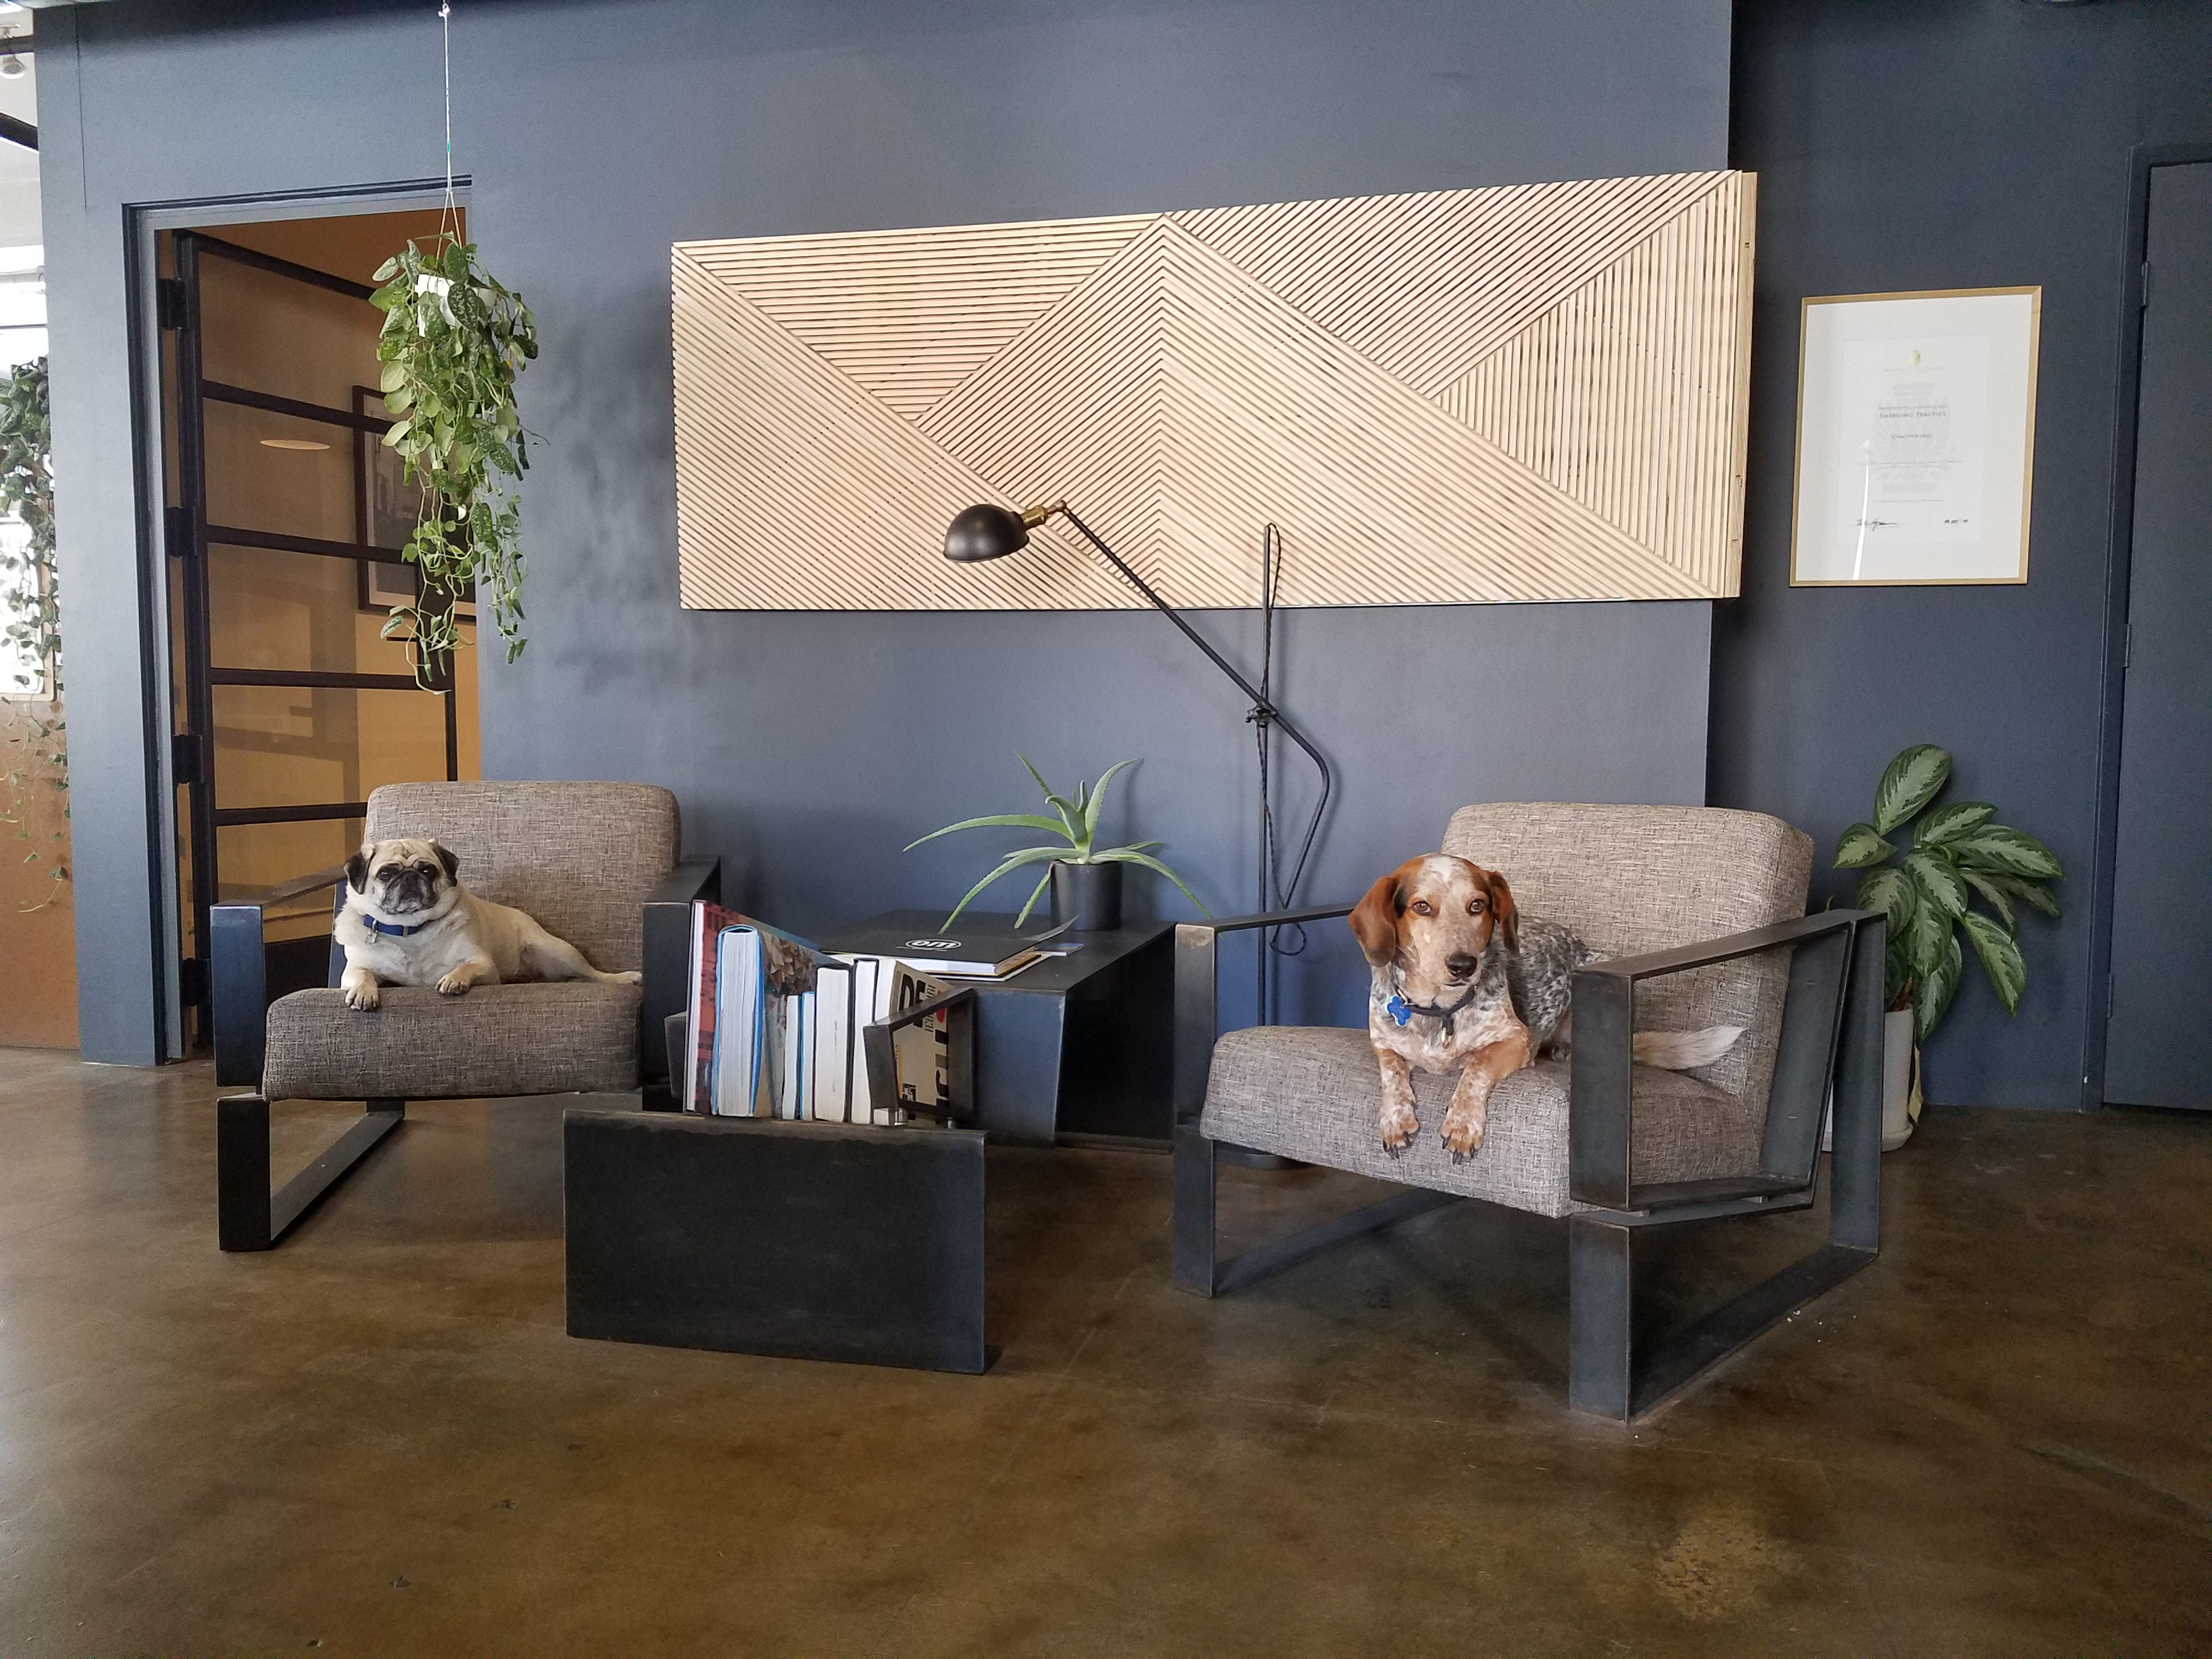 Model Dog Furniture Omgivning architecture office